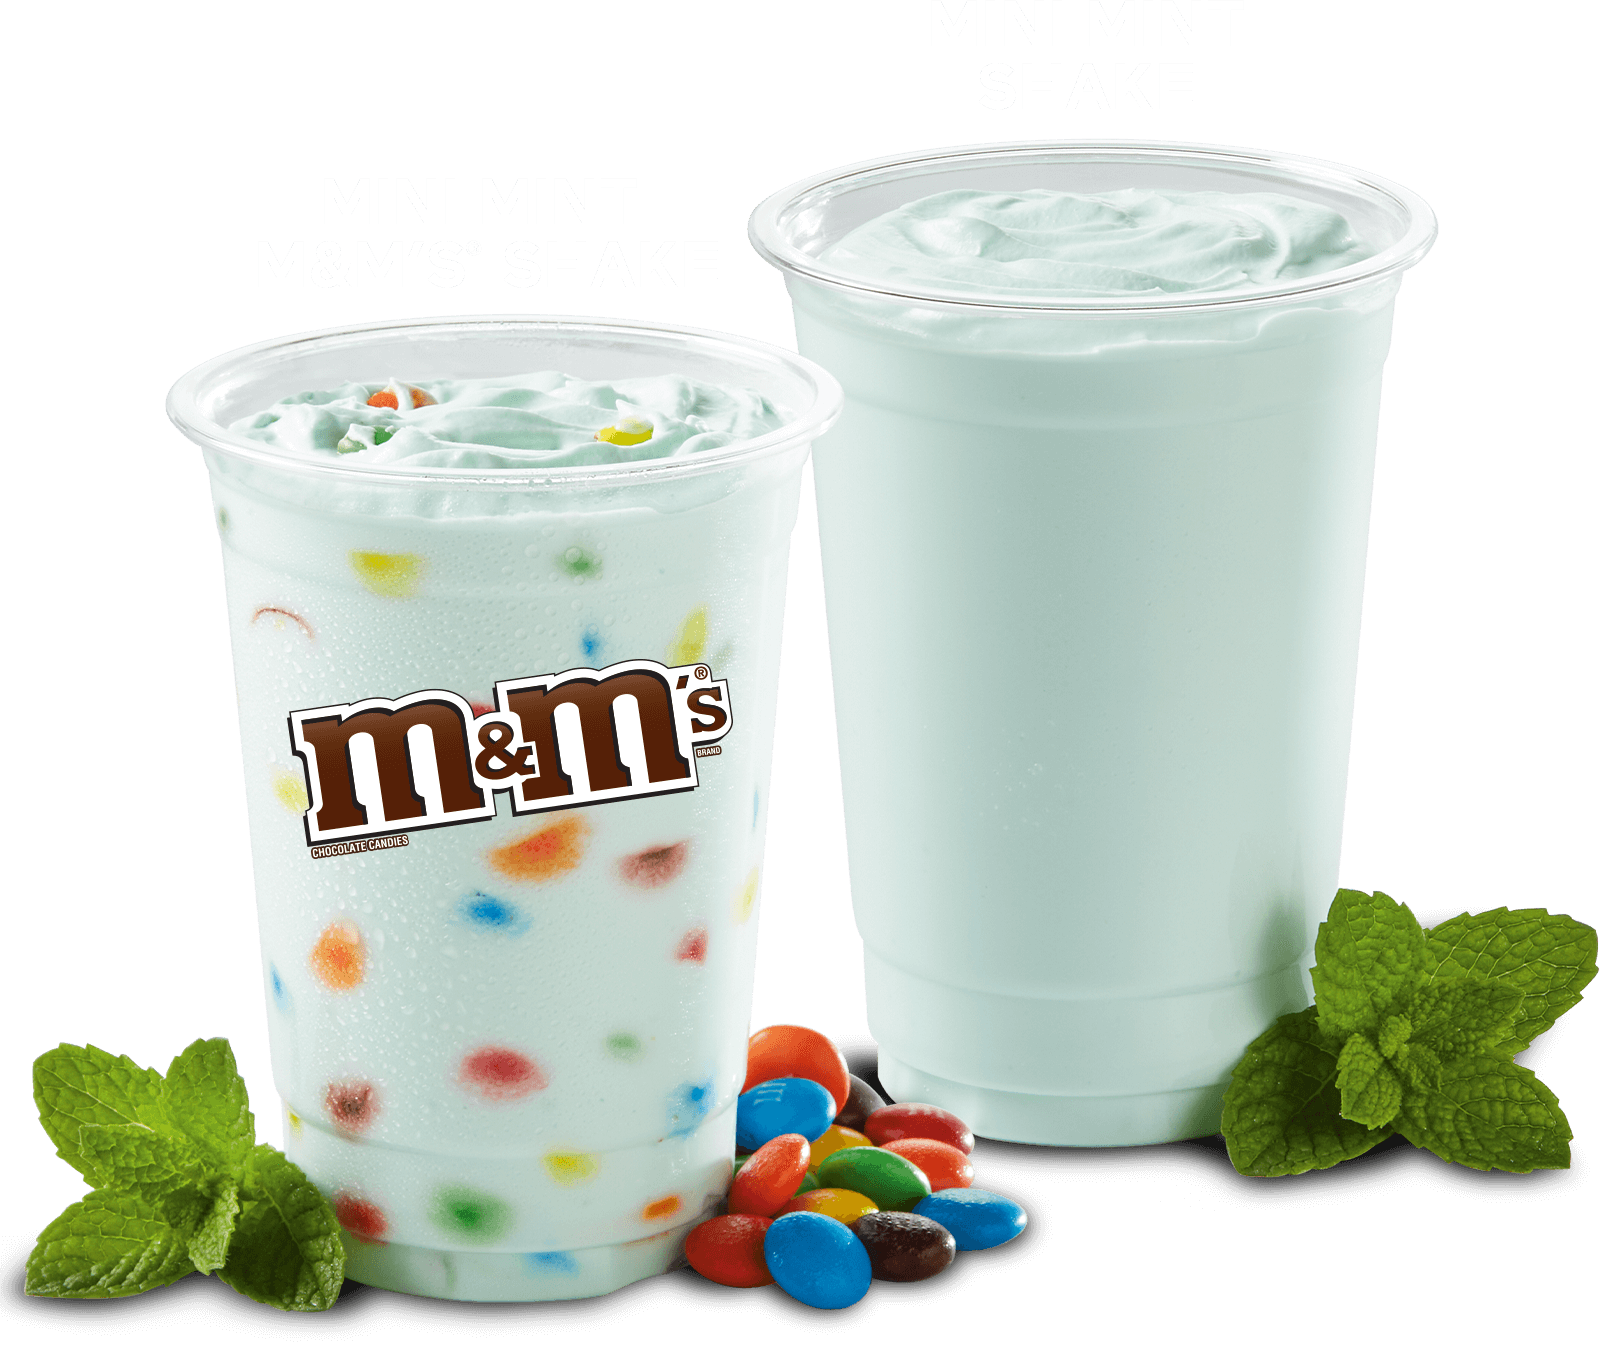 Mini Mint M&M's Shake and Mini Mint Shake